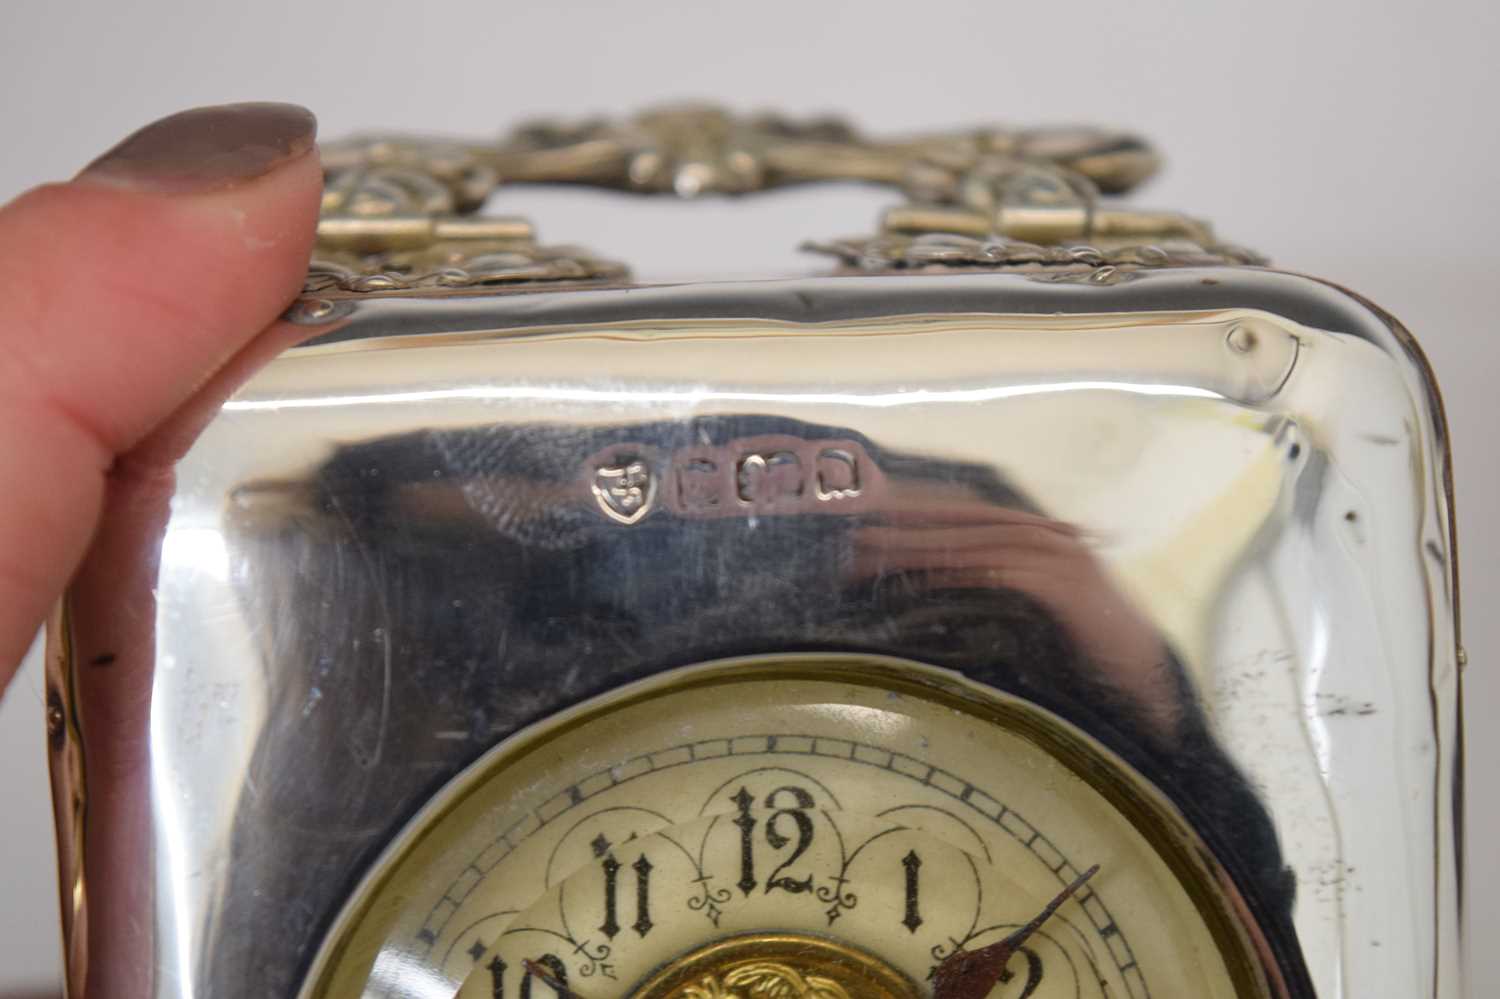 Goliath pocket watch with desk stand, and a desk clock - Bild 3 aus 9